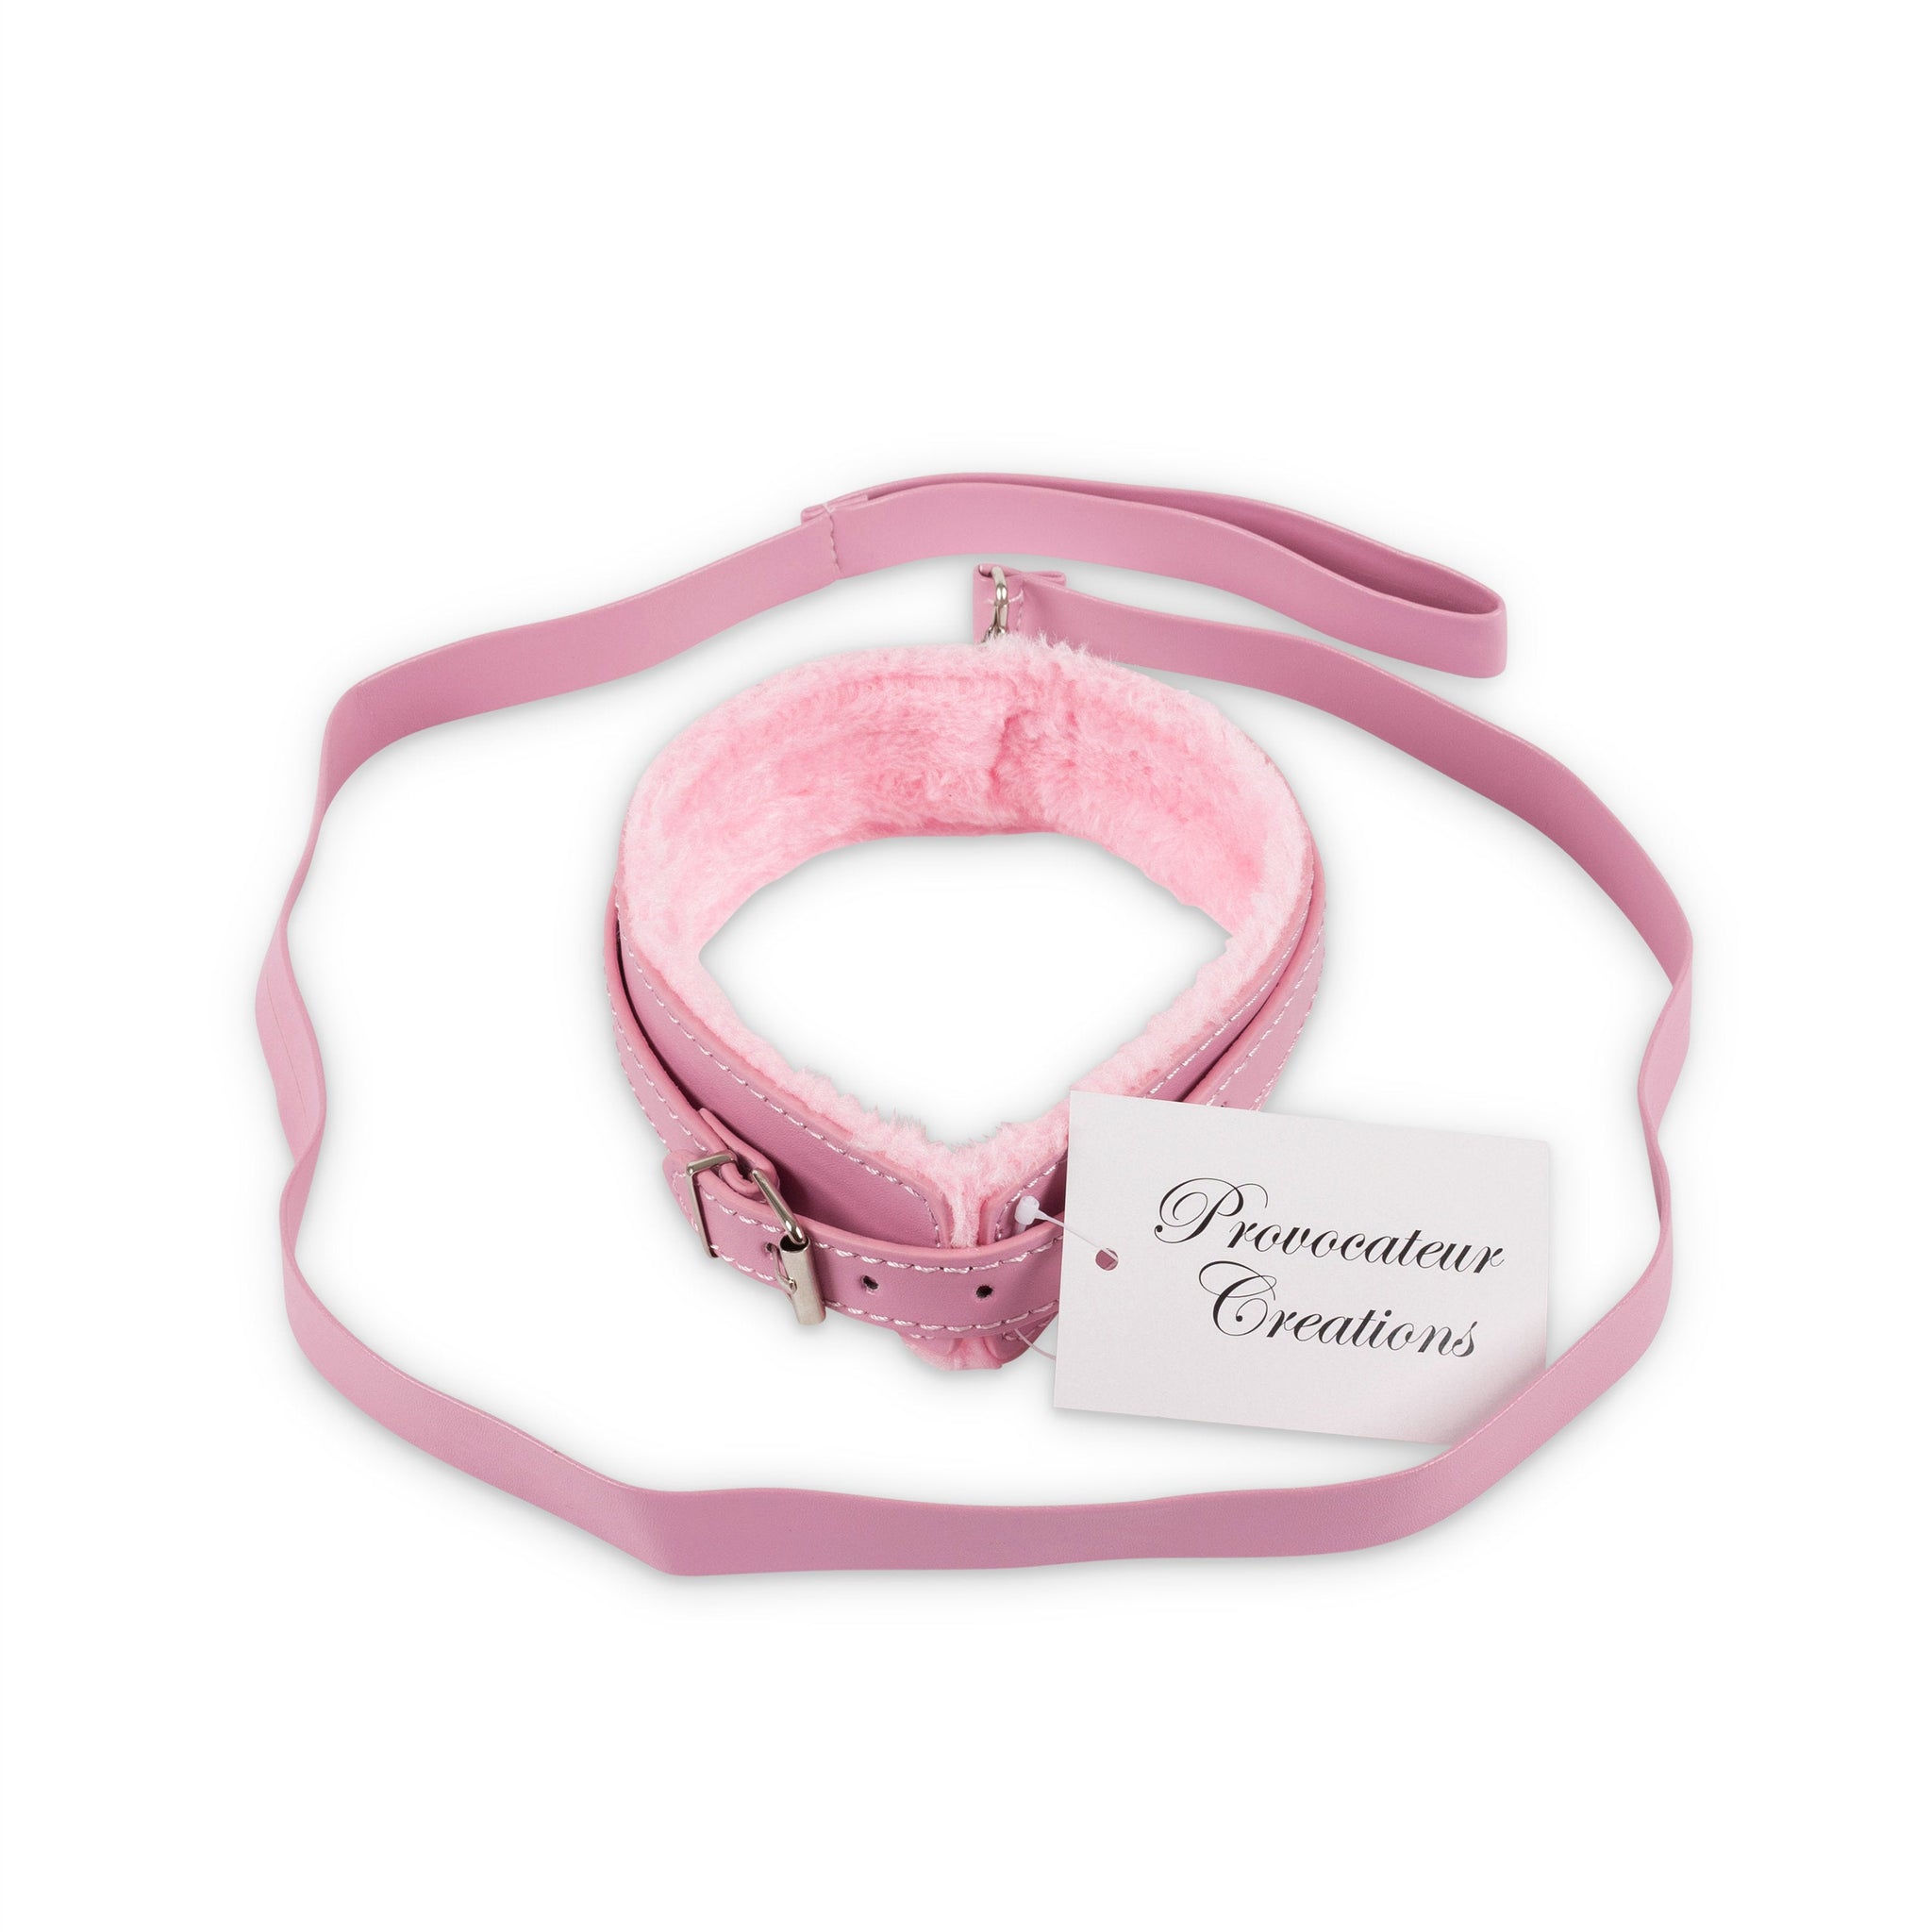 Bondage Dog Collar and Leash BDSM Pink Leather Restraints Cuffs Set